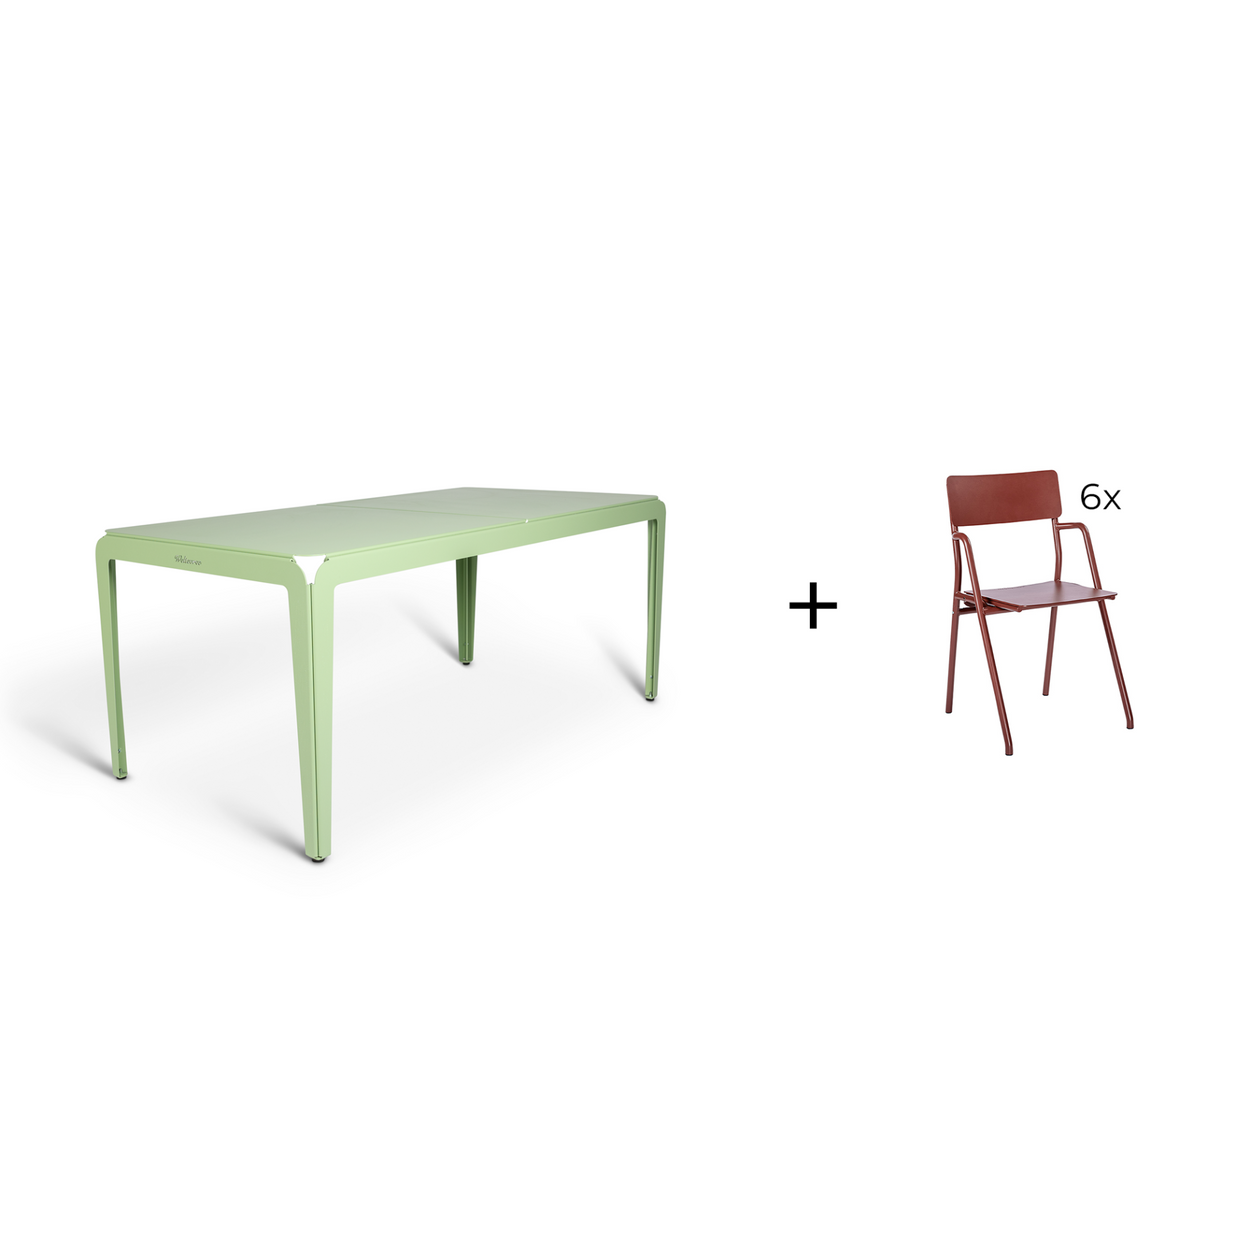 Bended table 180 inclusief 6 Flip-up chairs - 9 combinaties